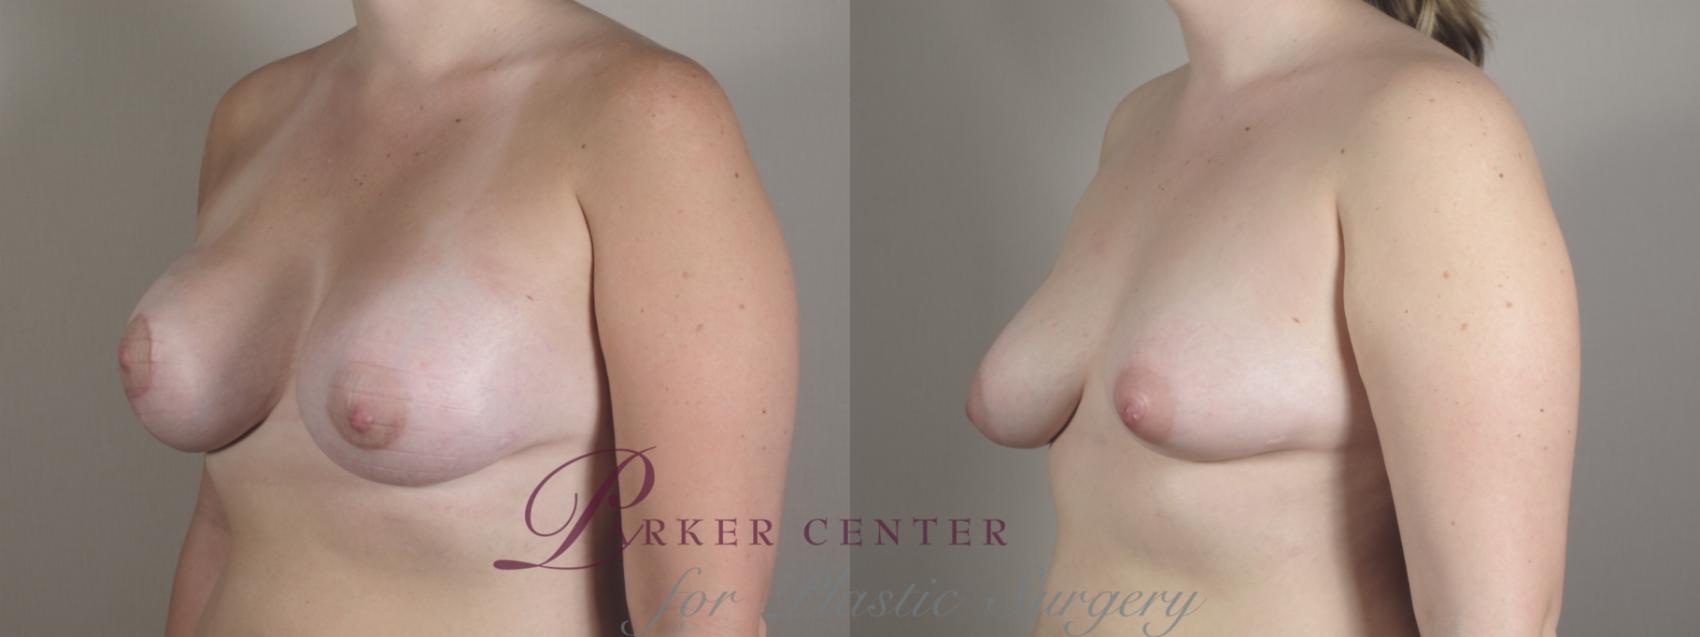 Breast Asymmetry Case 1021 Before & After Right Oblique | Paramus, NJ | Parker Center for Plastic Surgery